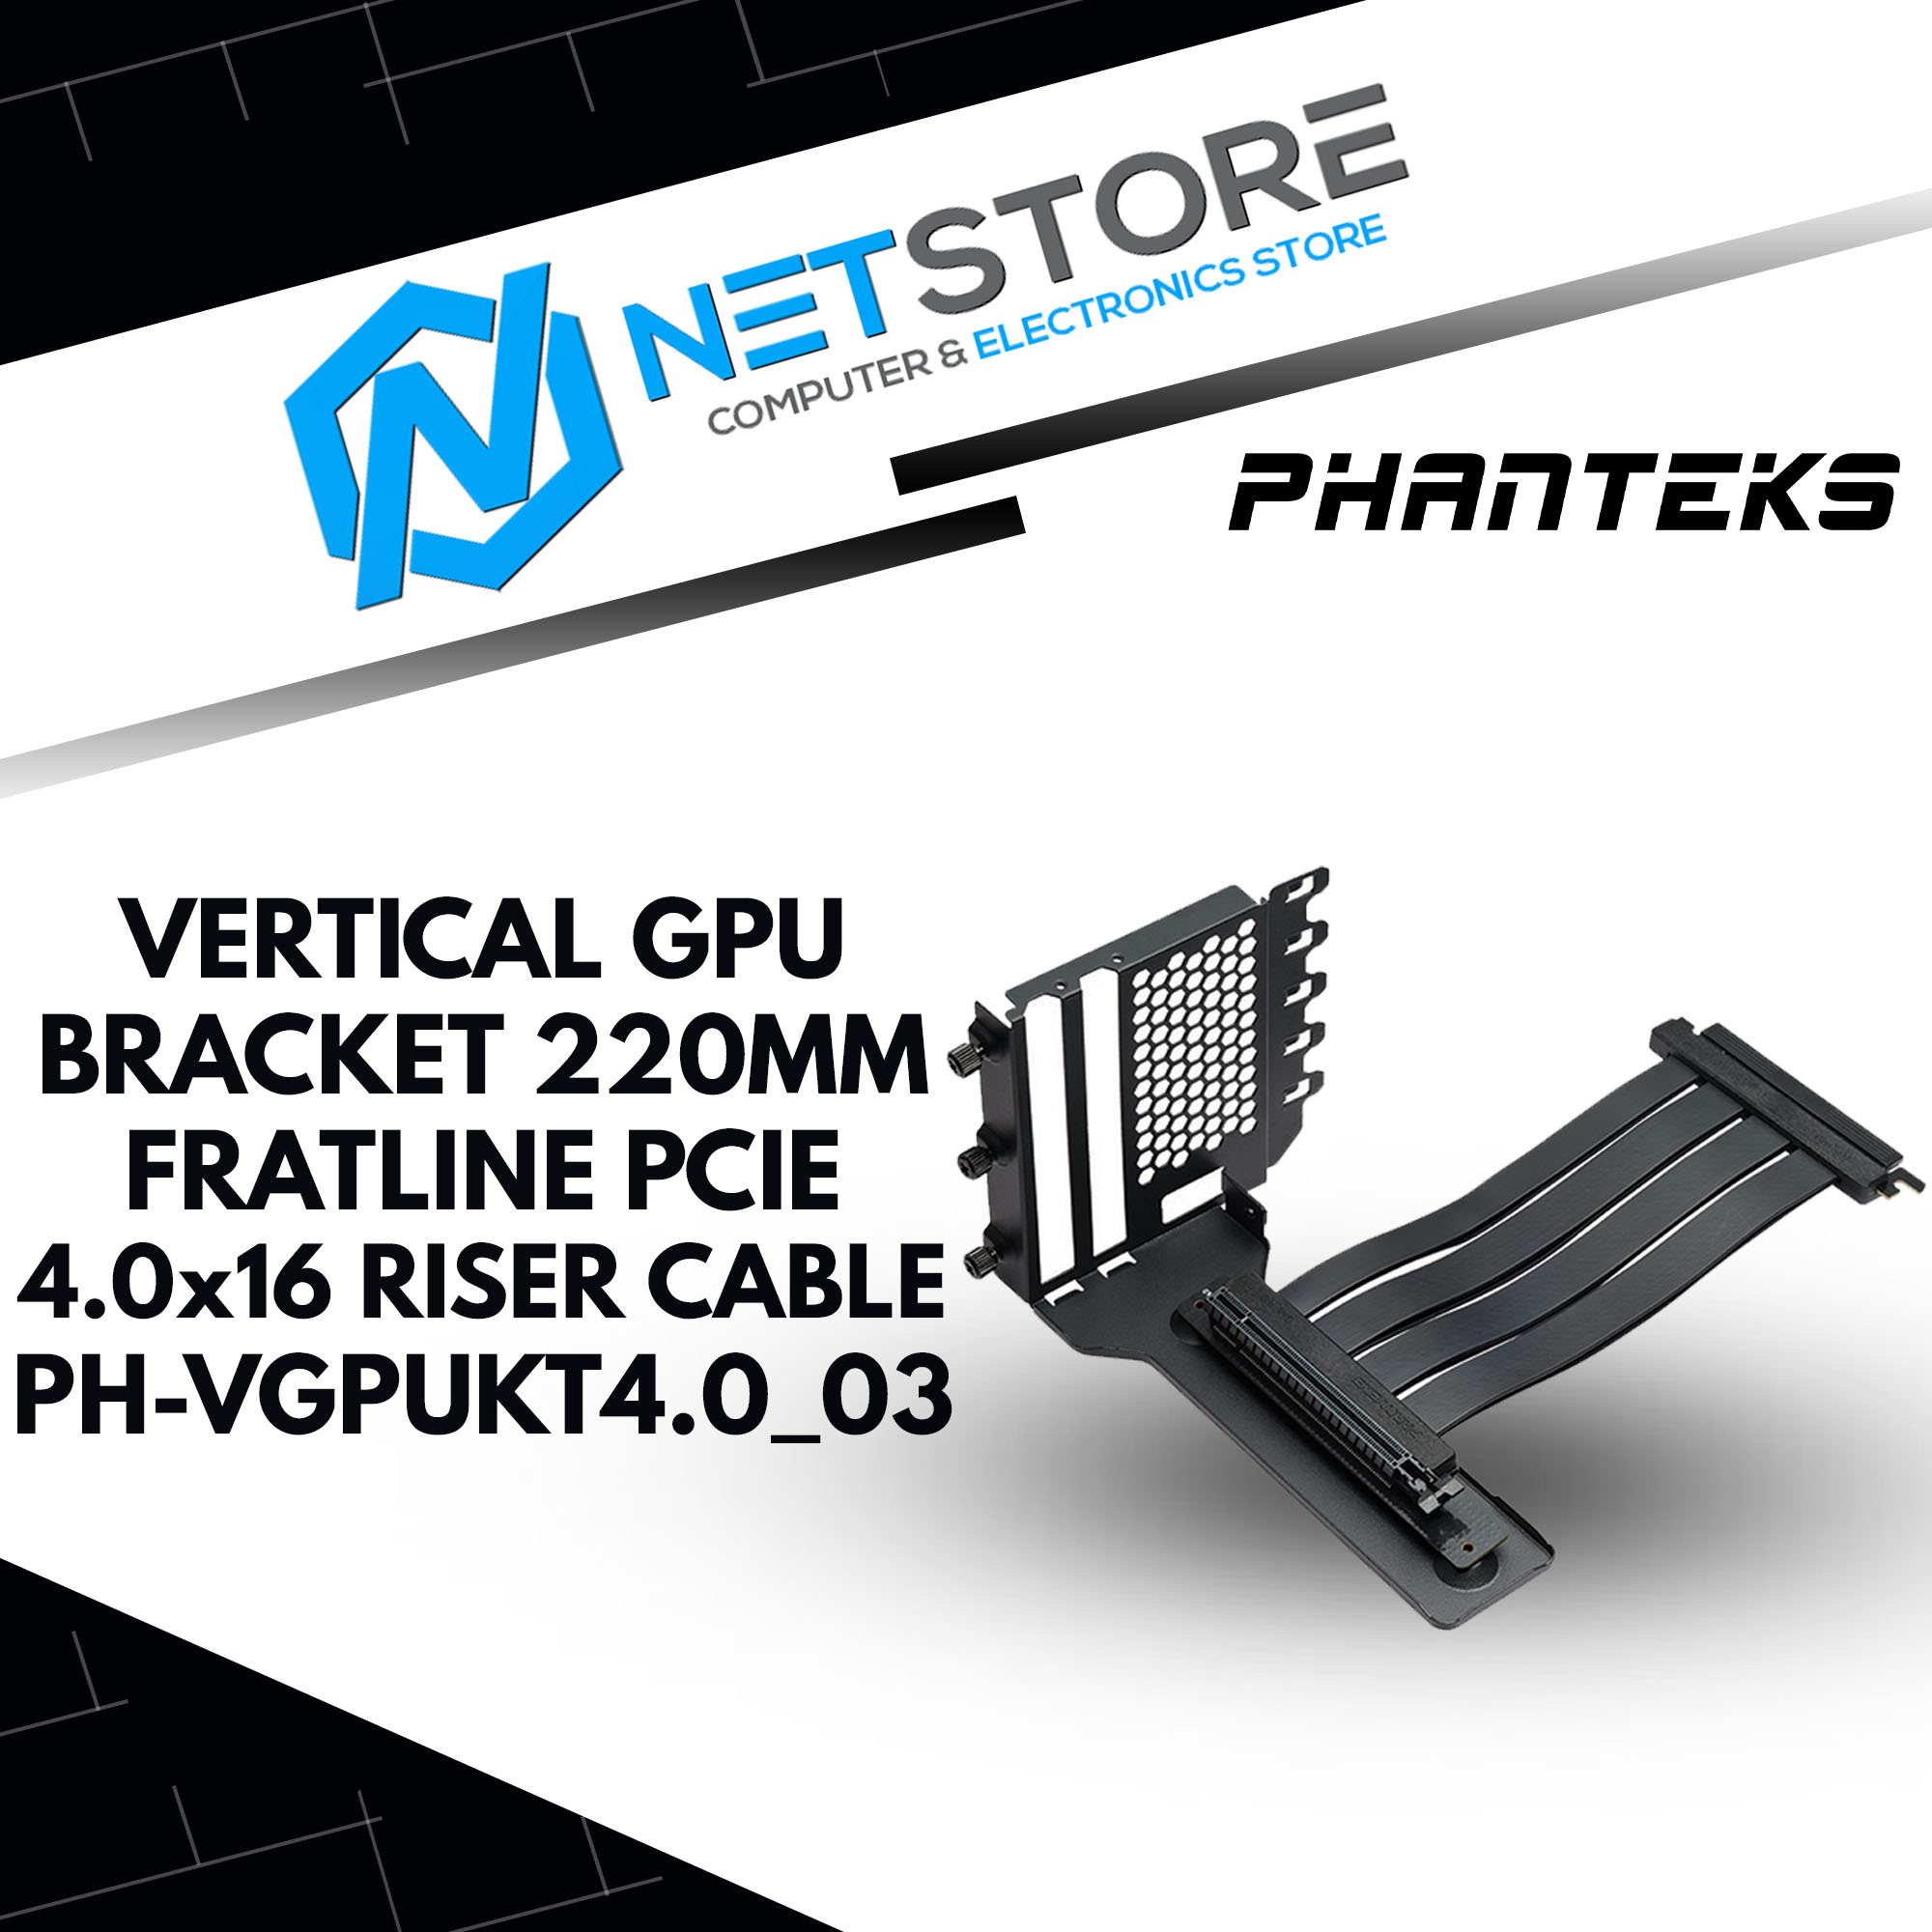 PHANTEKS VERTICAL GPU BRACKET 220MM FRATLINE PCIE 4.0x16 RISER CABLE